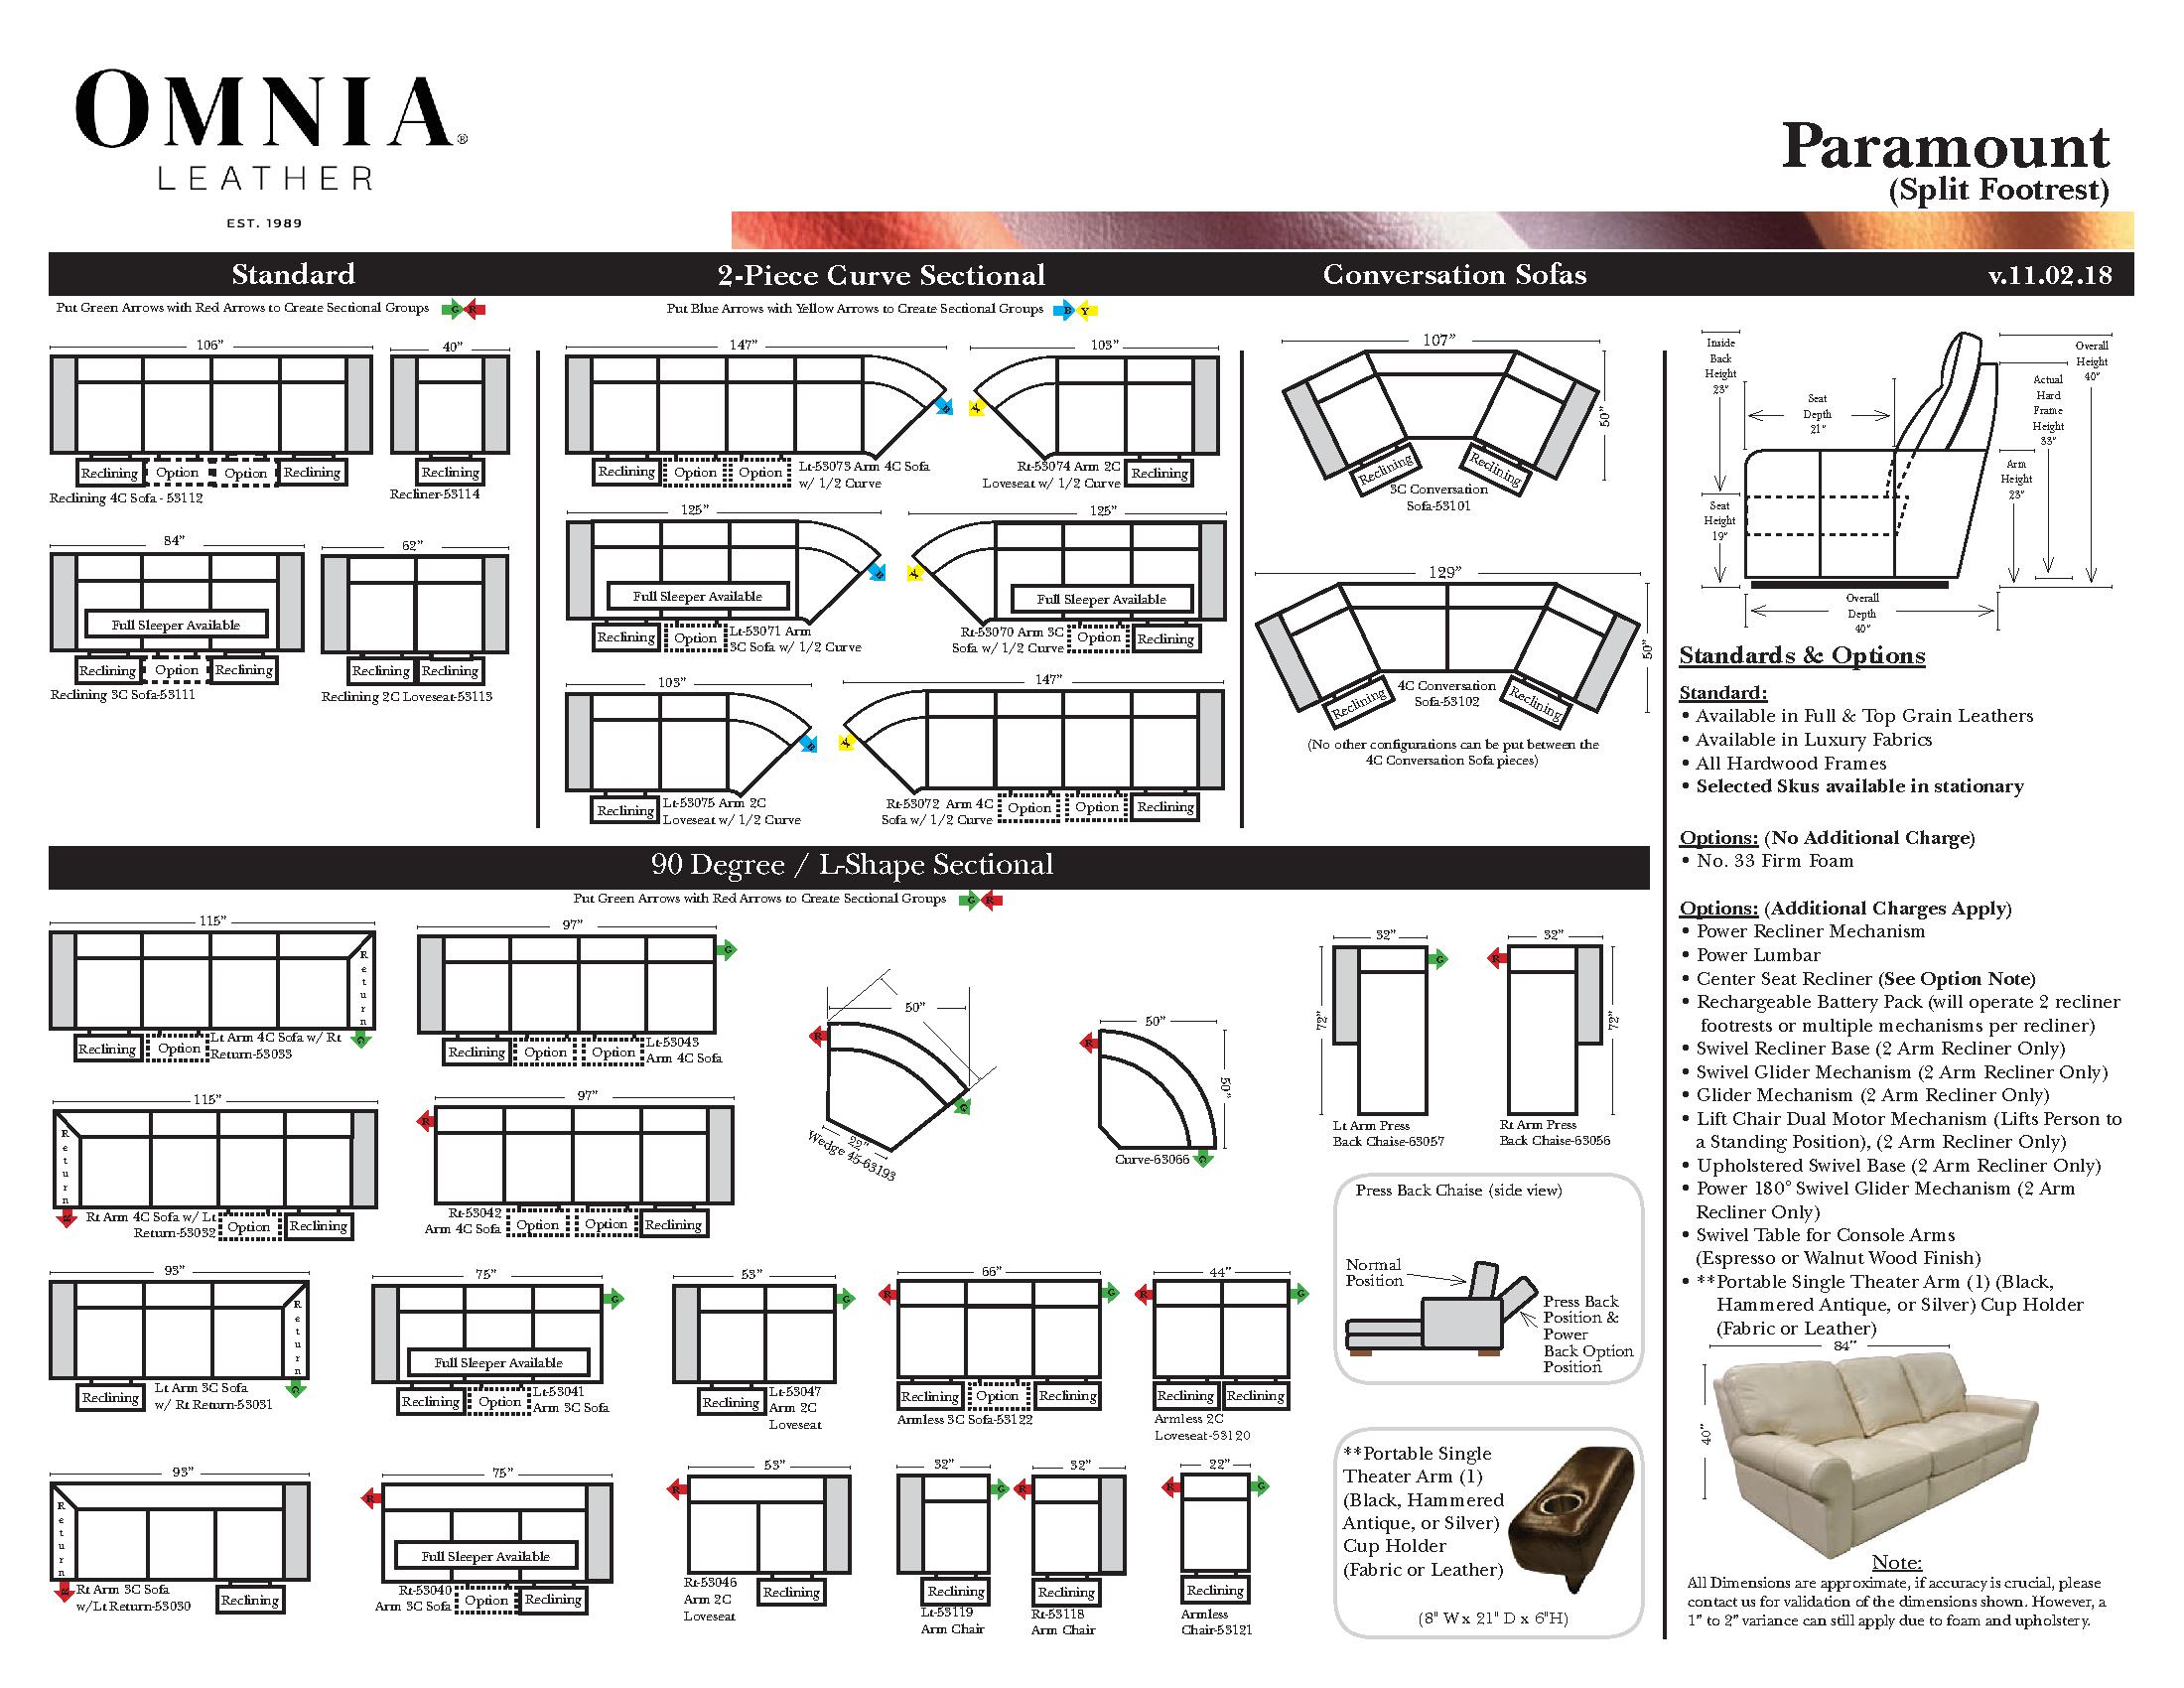 Paramount Omnia layout